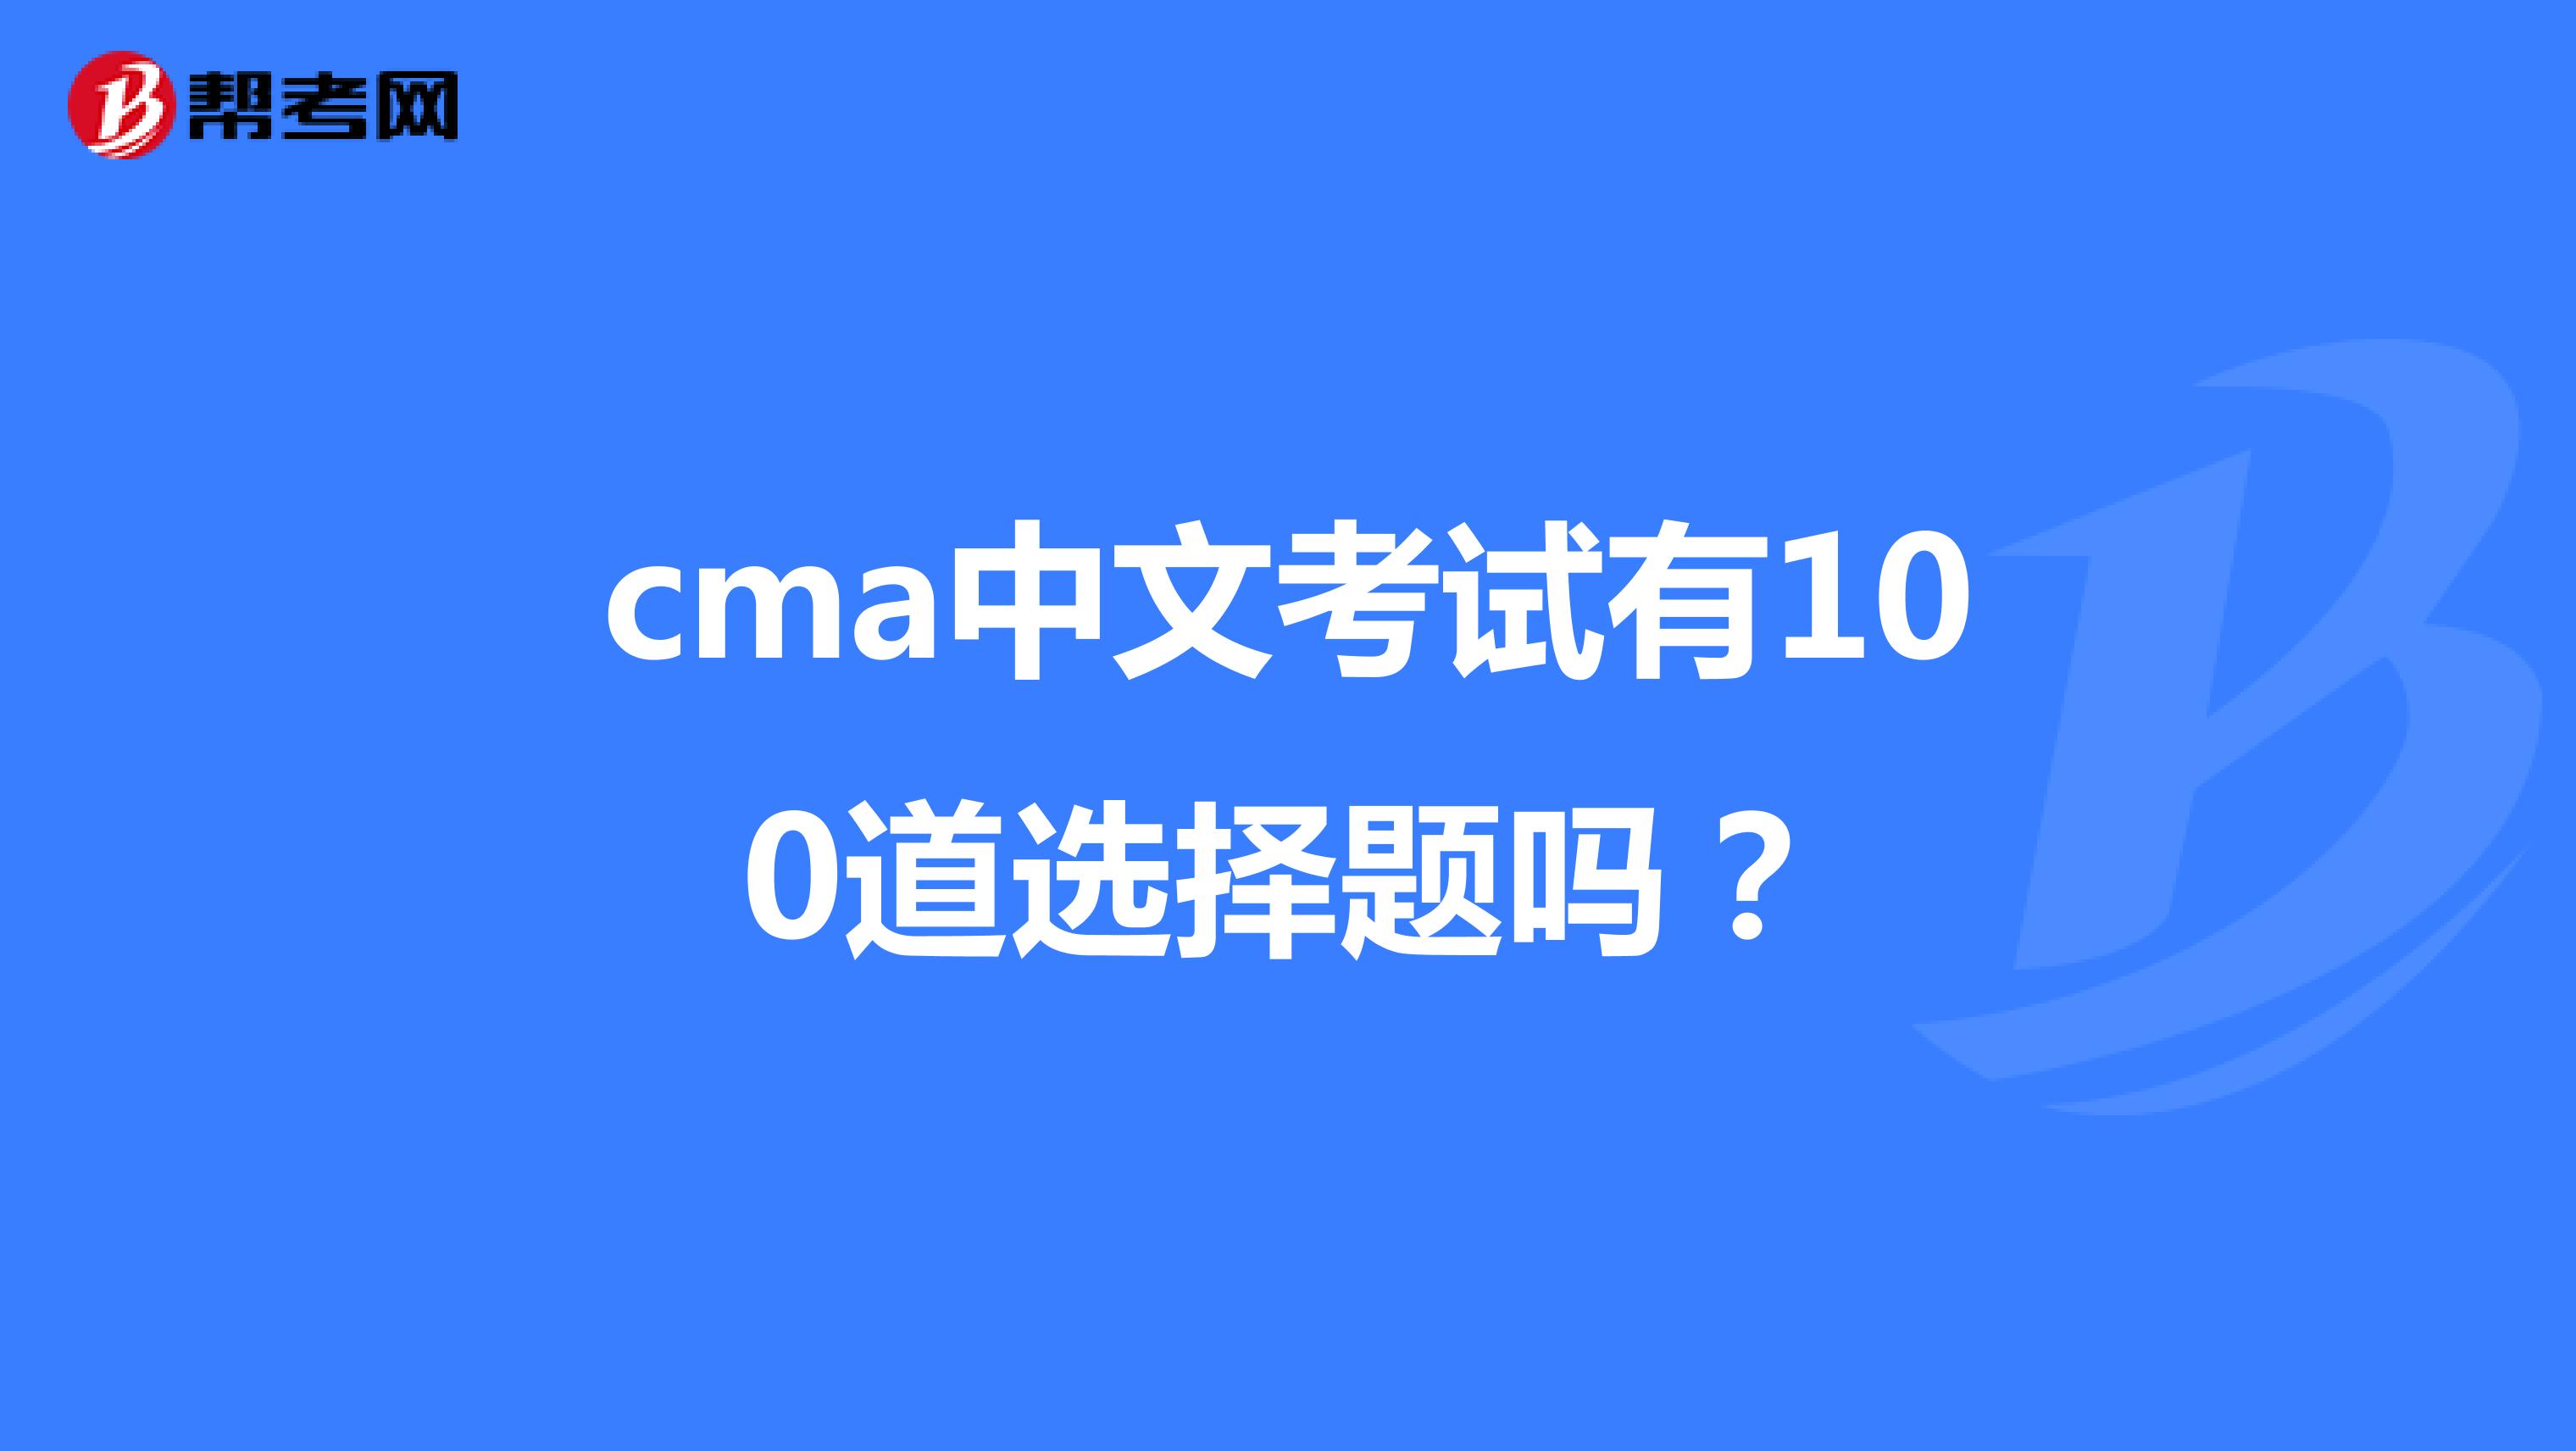 cma中文考试有100道选择题吗？